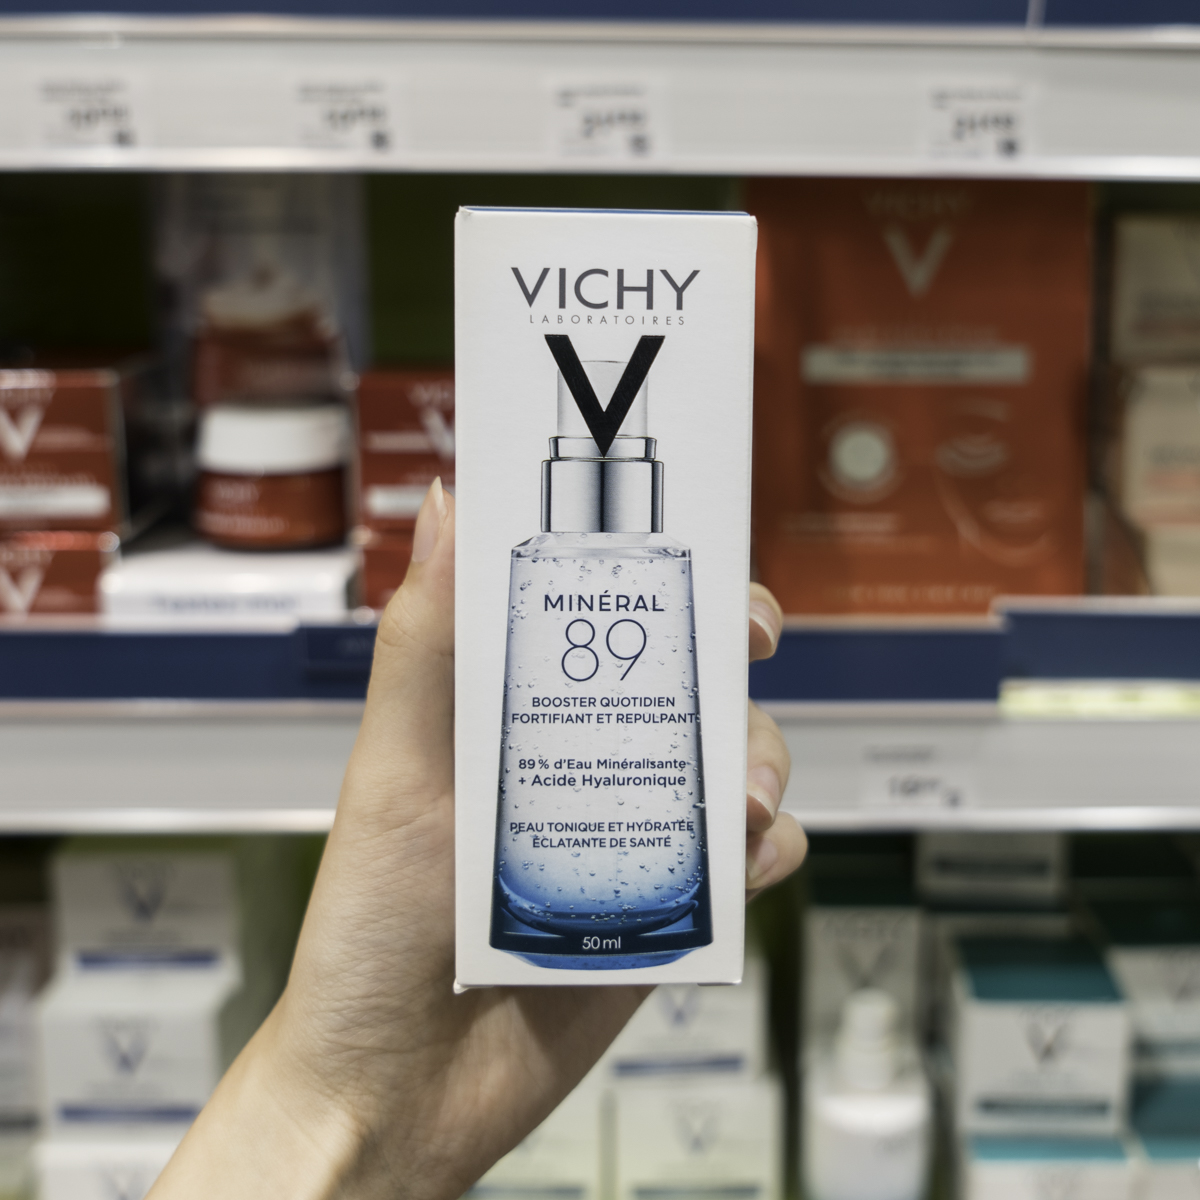 Where to buy Vichy in Paris